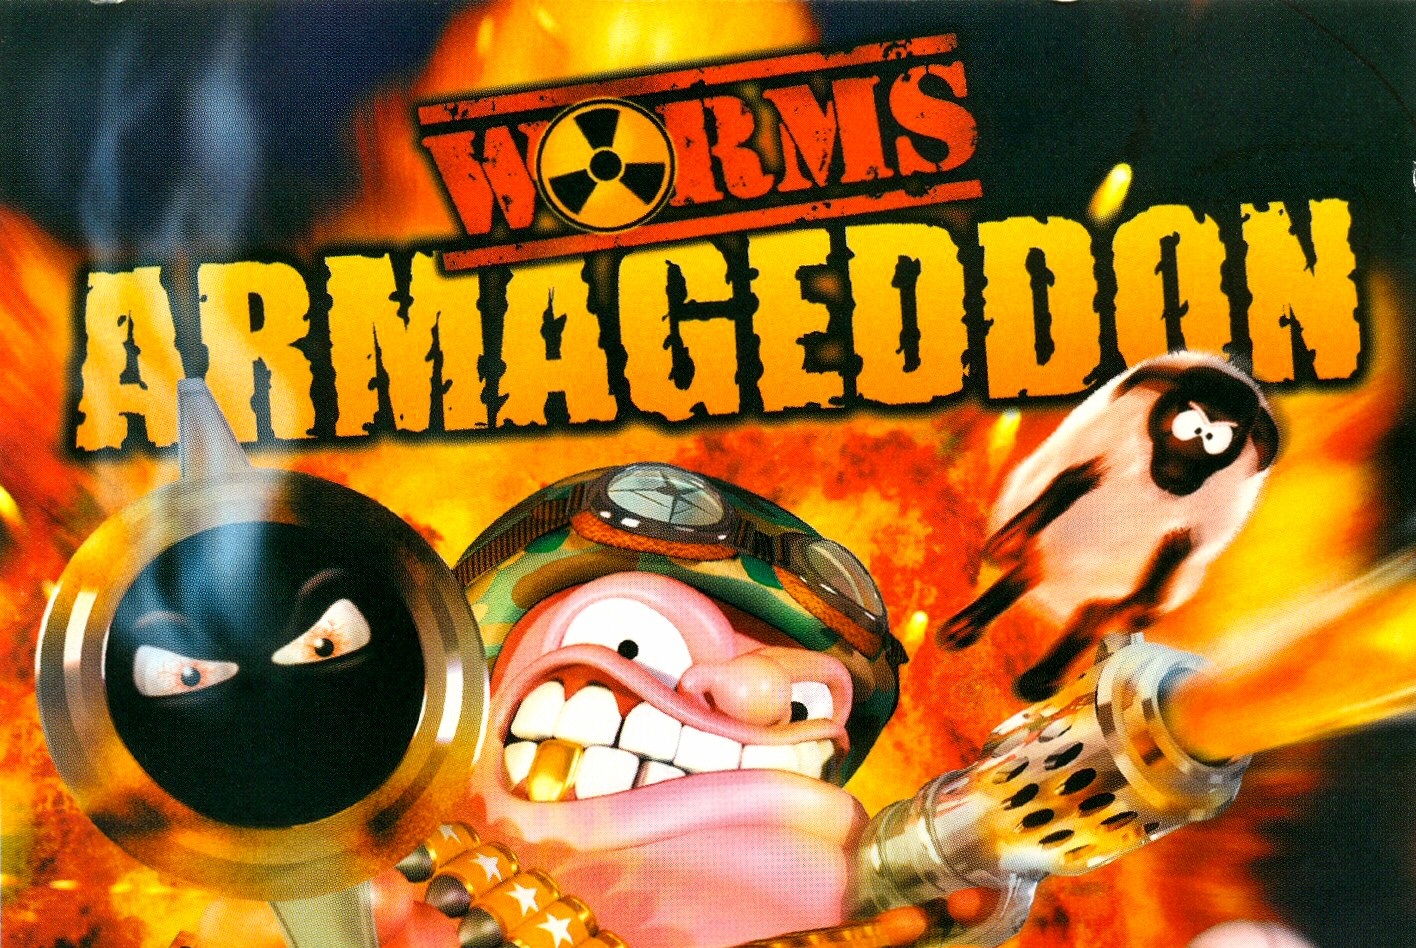 worms armageddon download pc full version